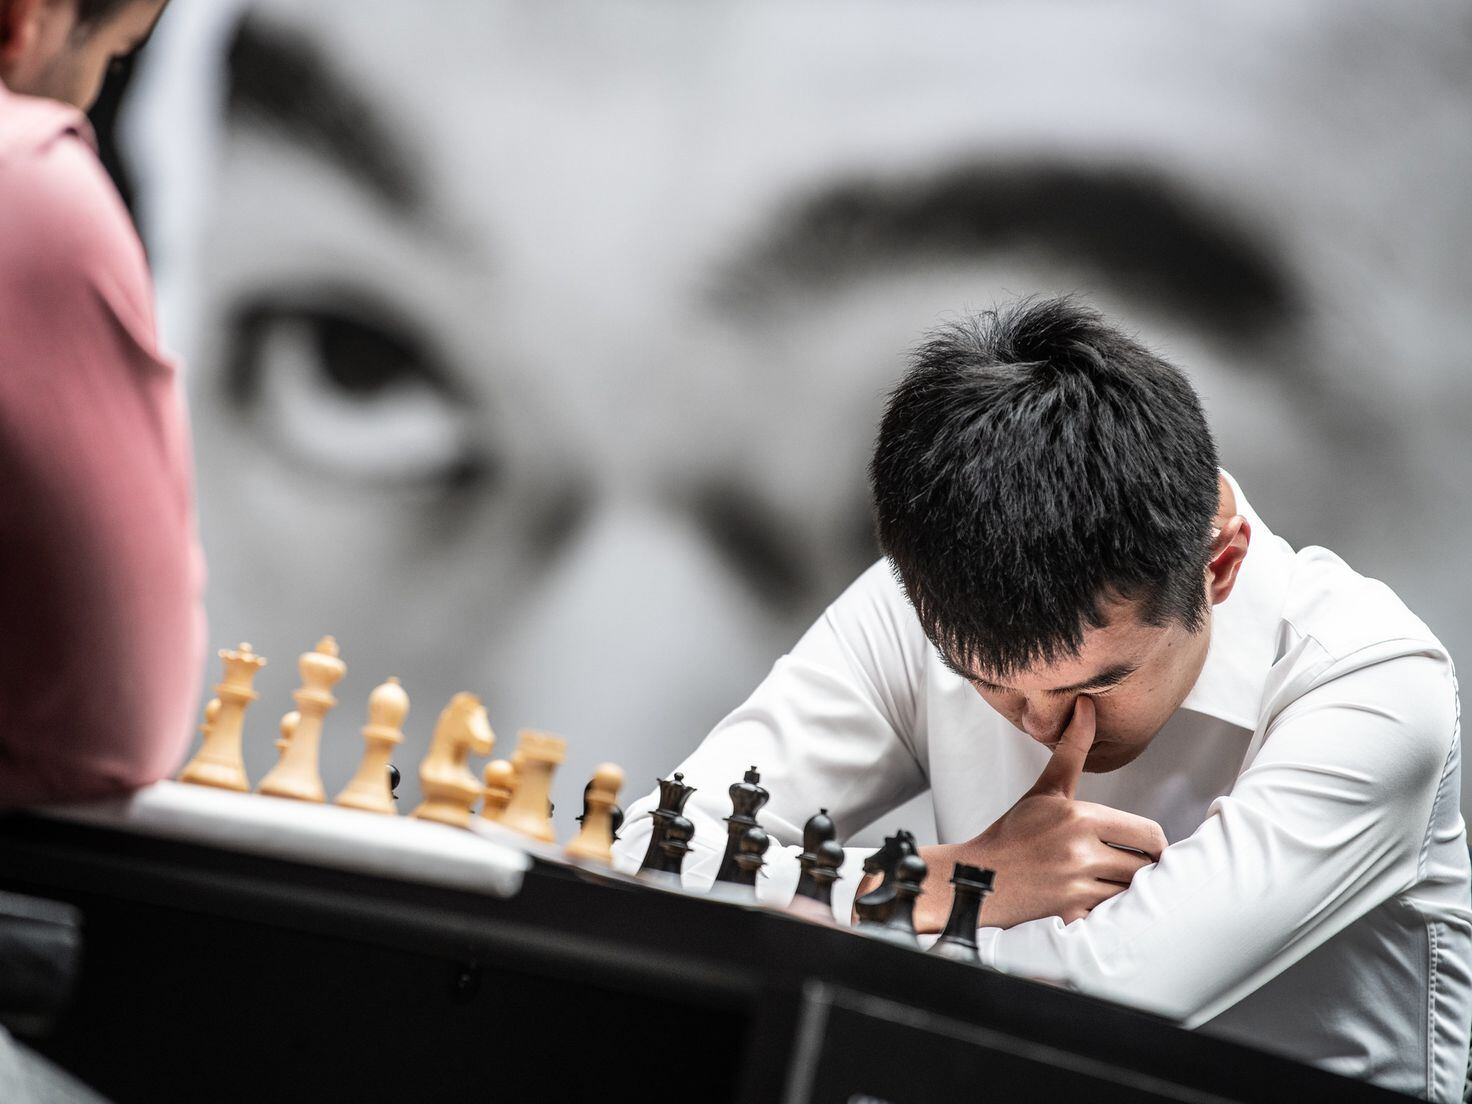 Ding Liren vence o Campeonato Mundial de Xadrez da FIDE 2023 